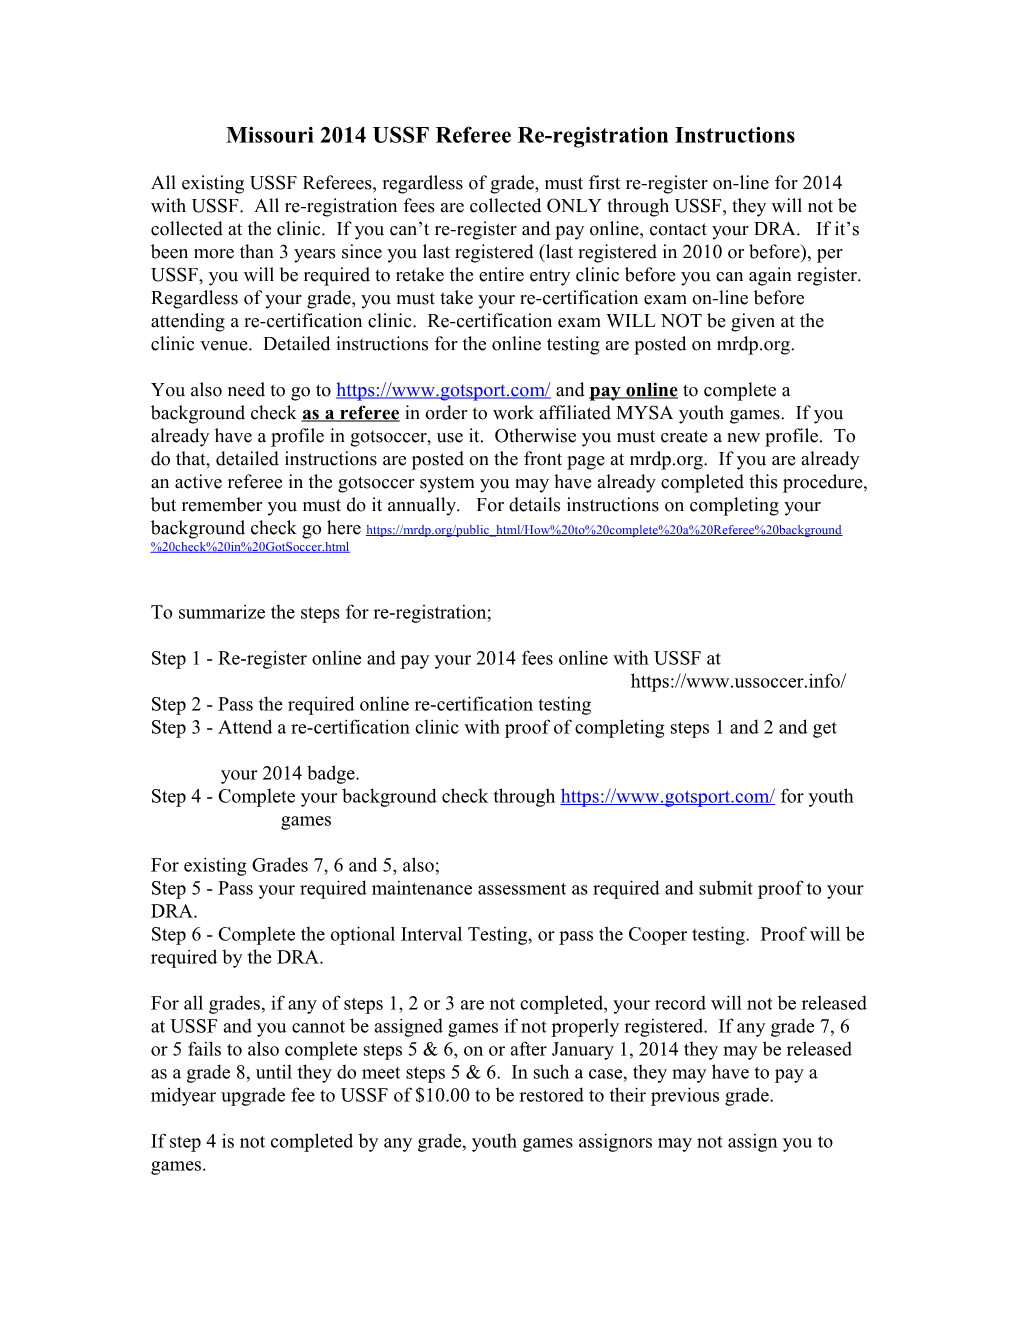 Missouri 2012 USSF Referee Re-Registration Instructions